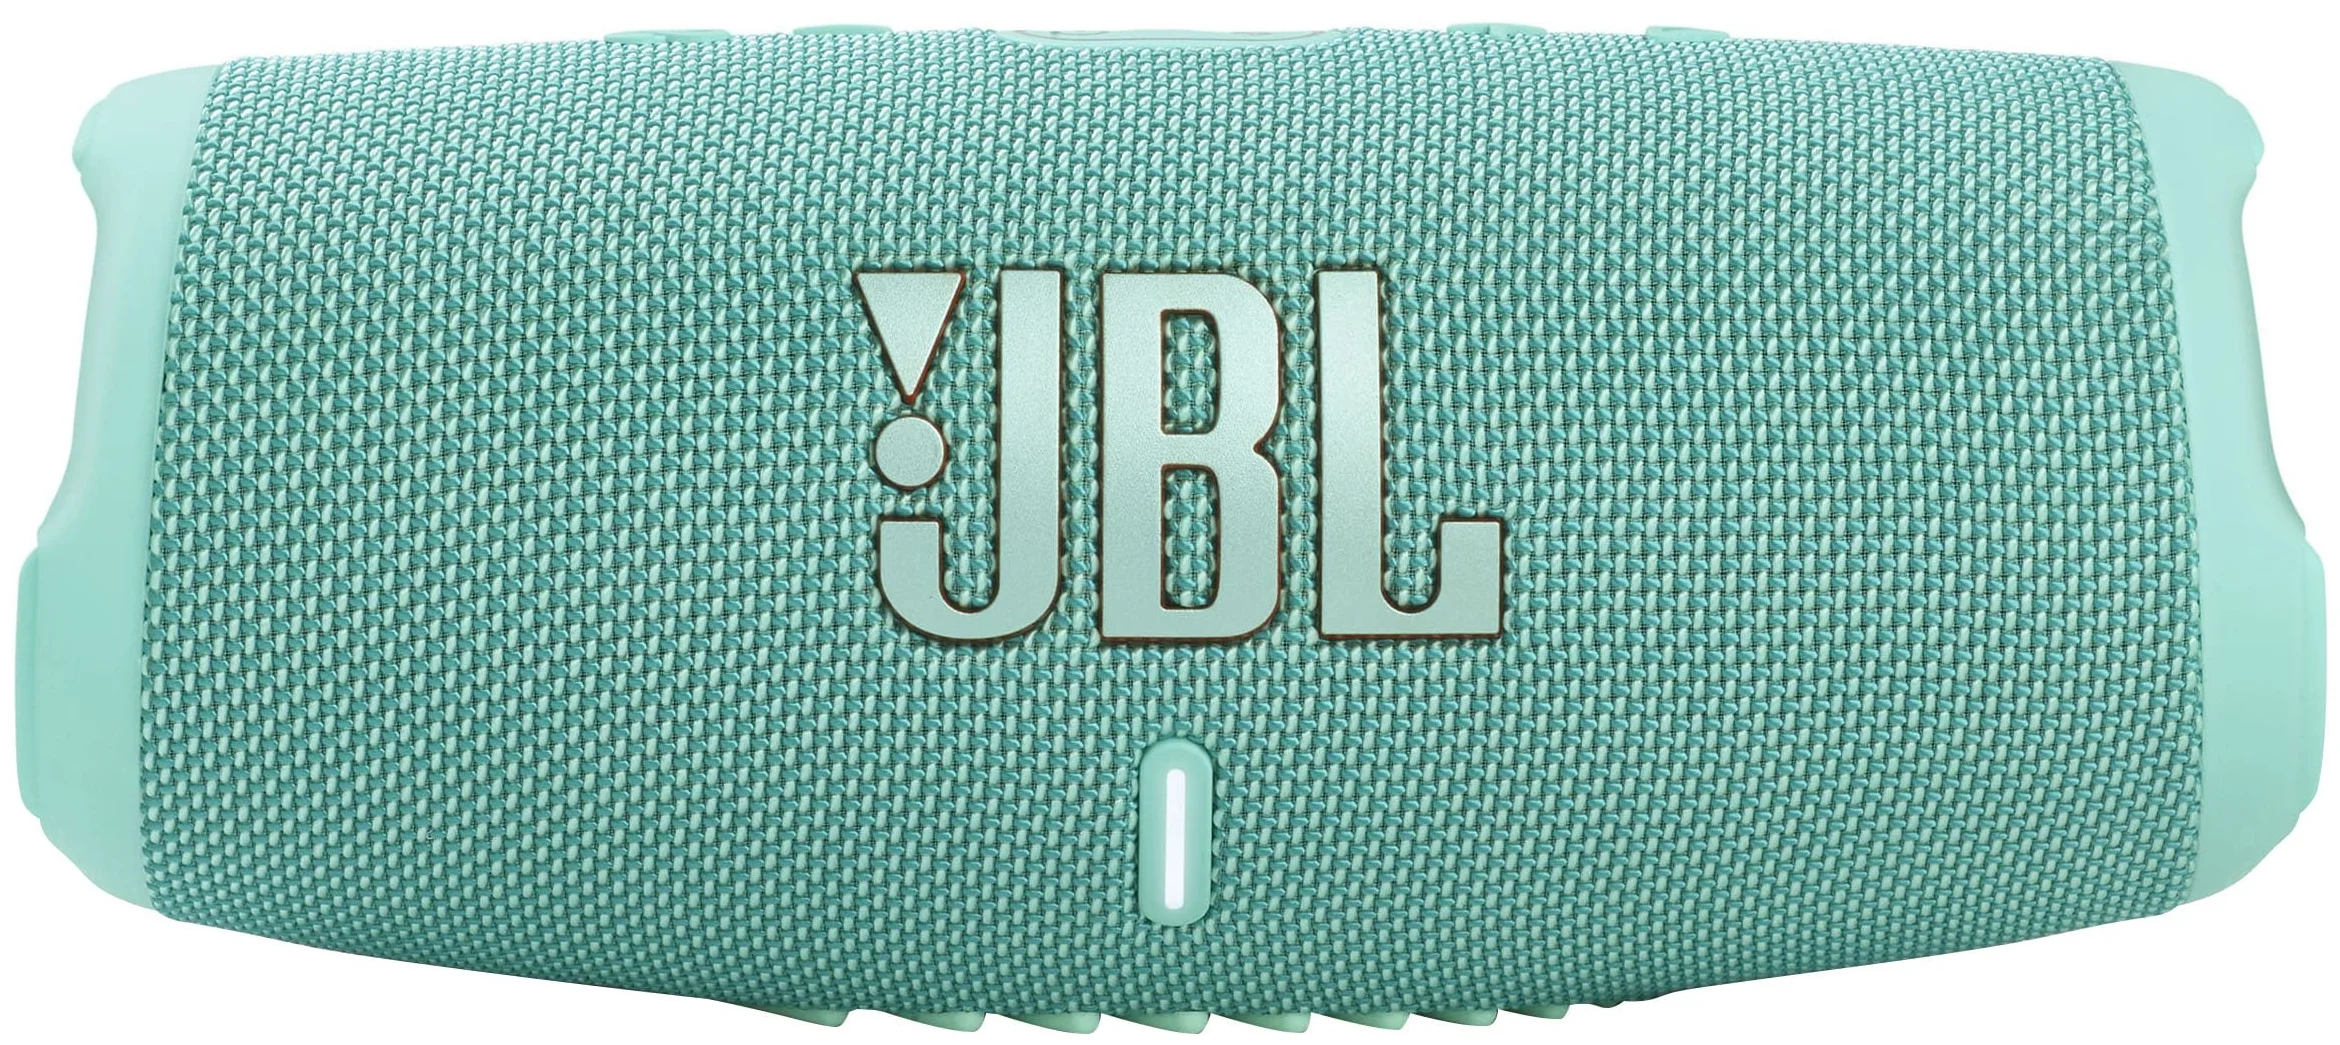 Портативная колонка JBL Charge 5 бирюзовый